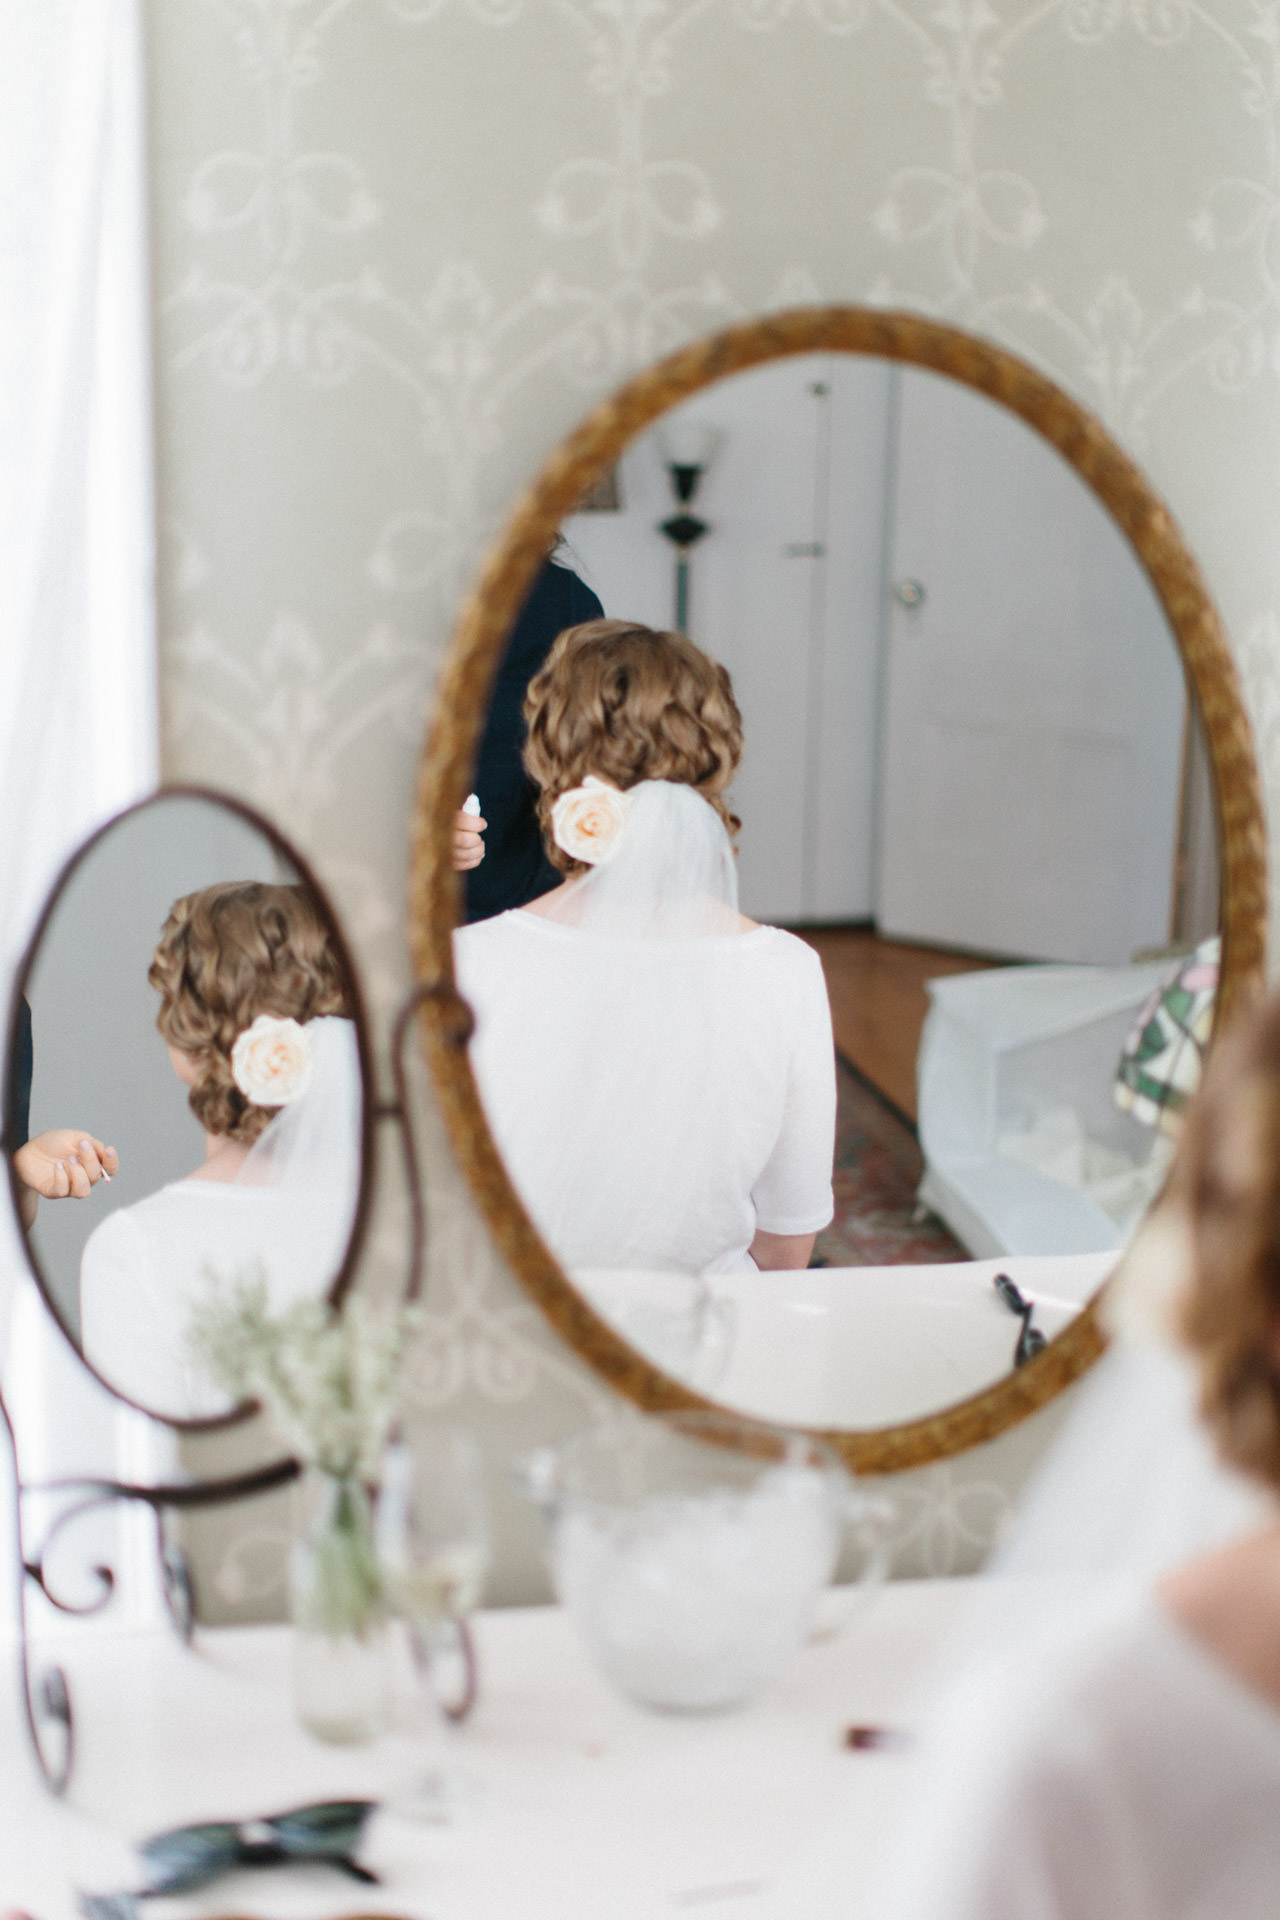 Bride's reflection in a mirror